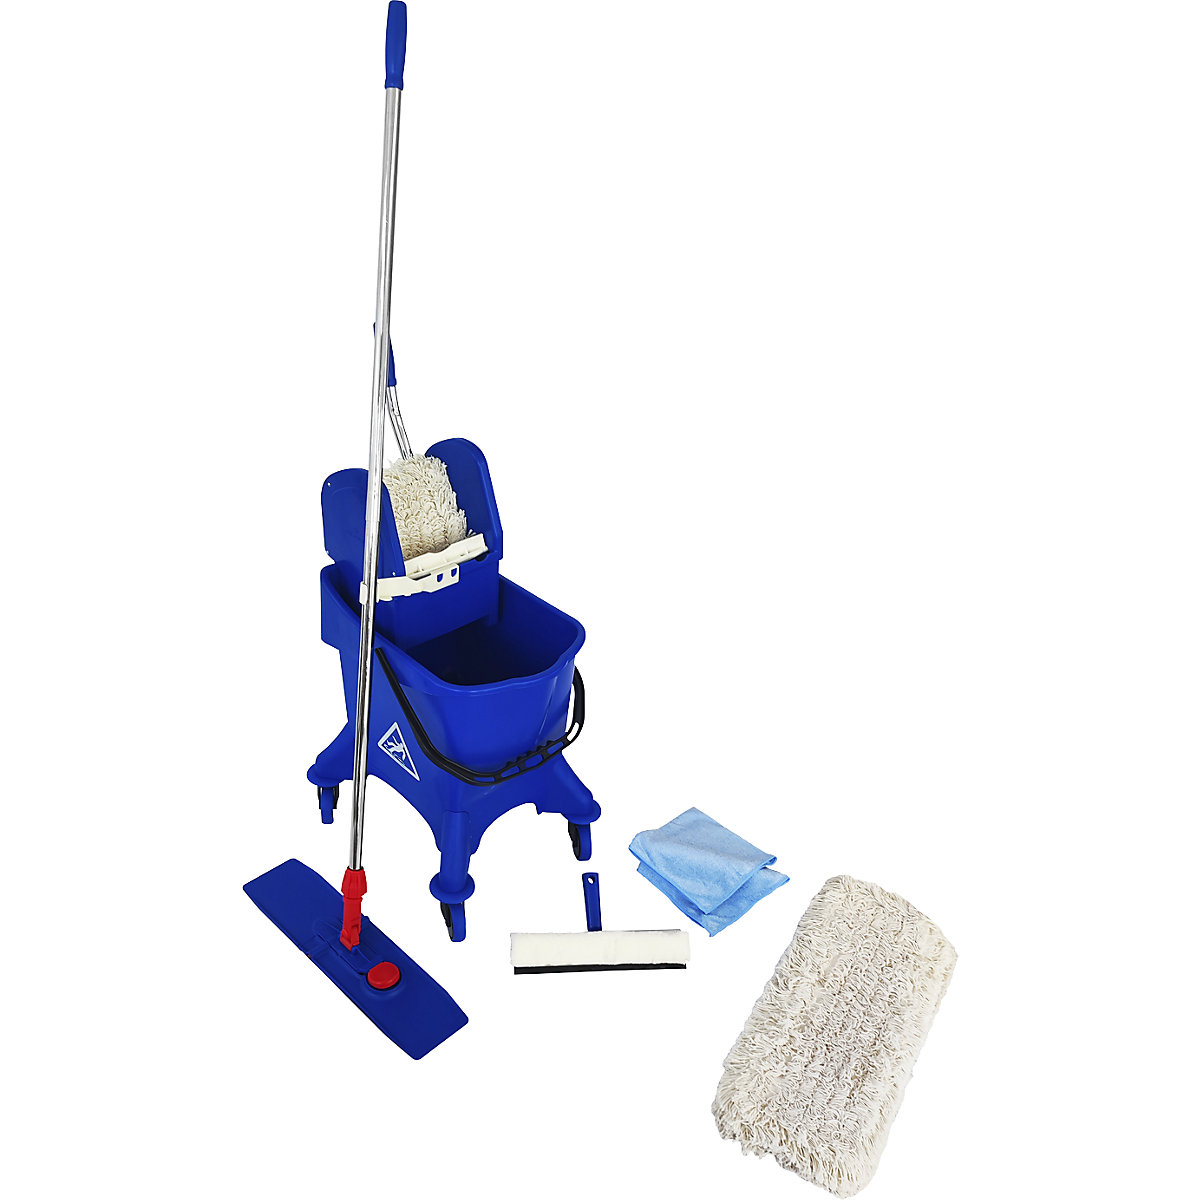 BASIC professional cleaning set